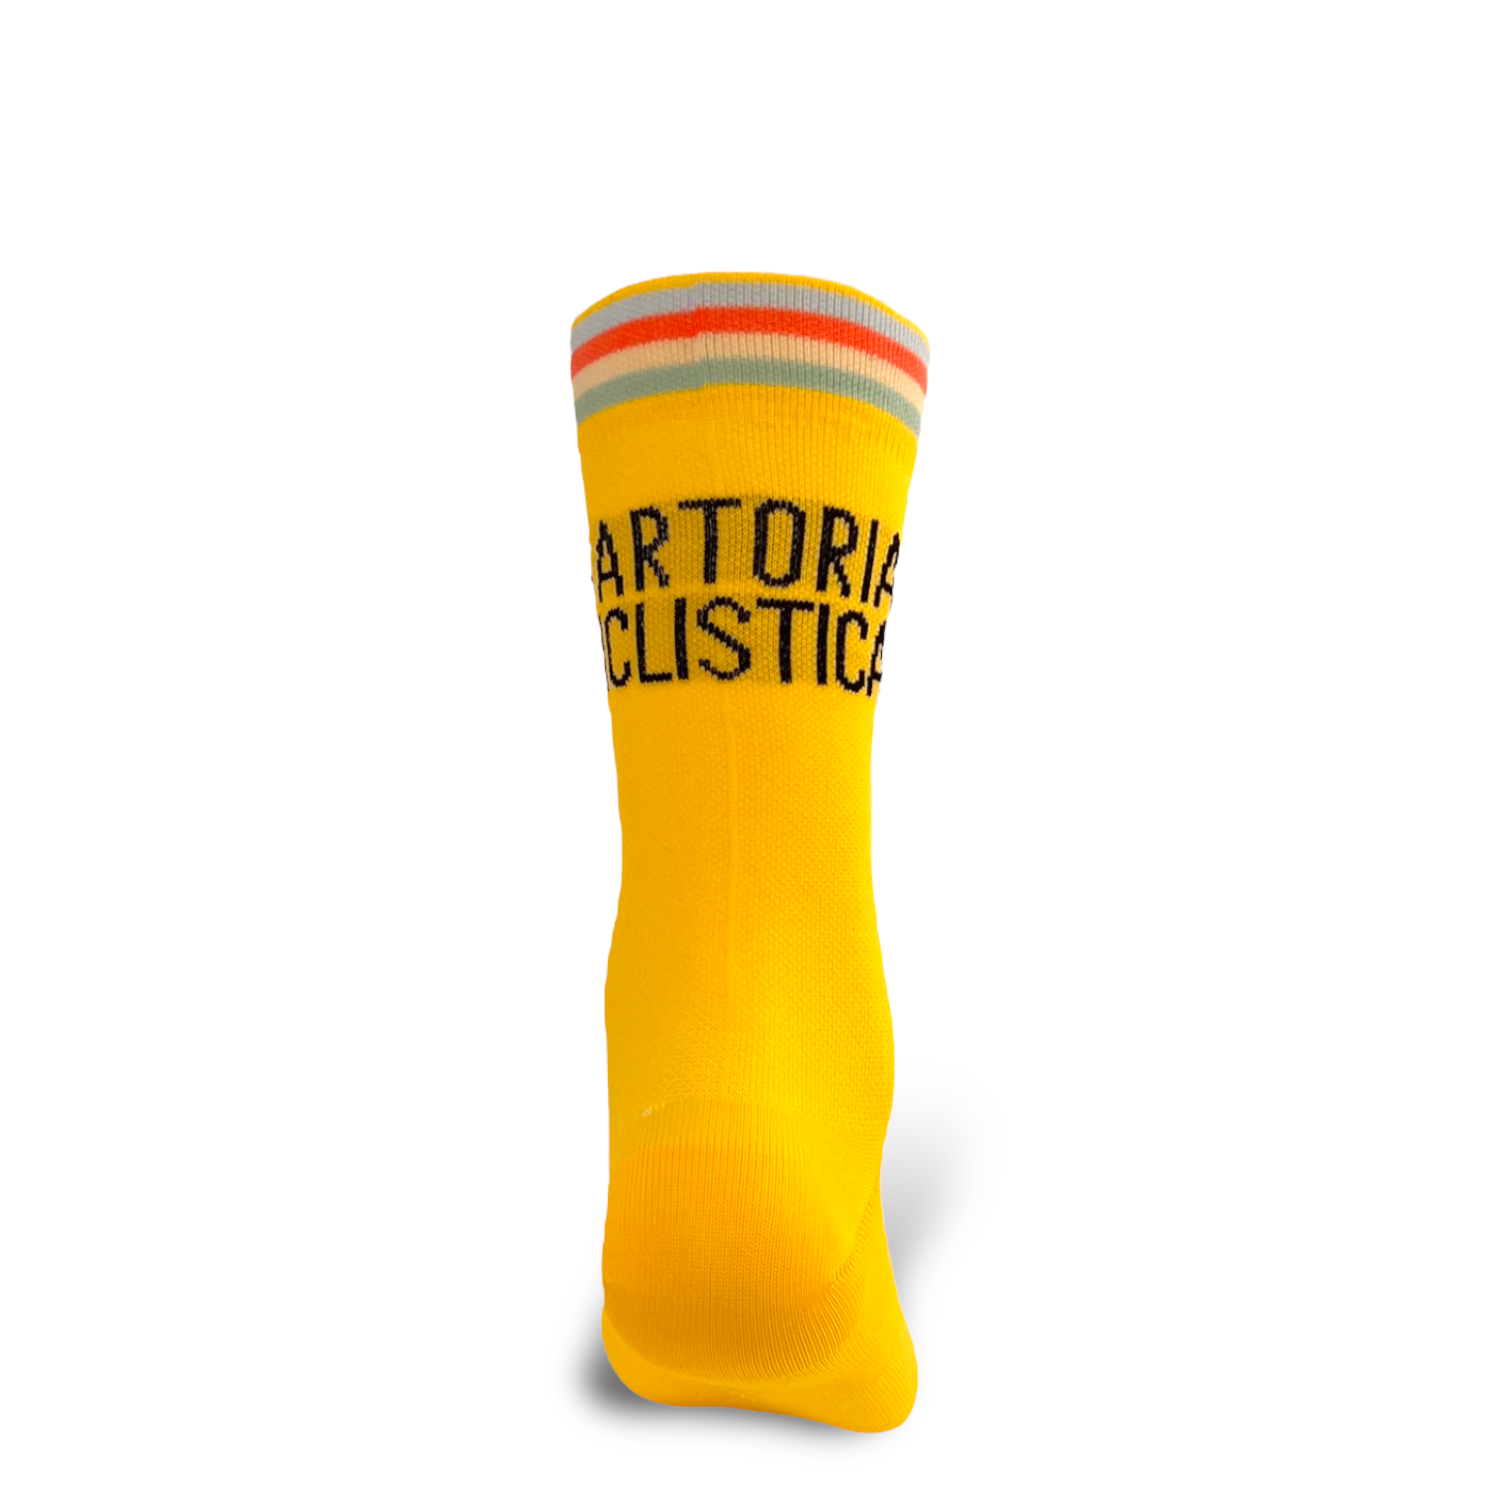 Yellow sun Sartoria ciclistica socks